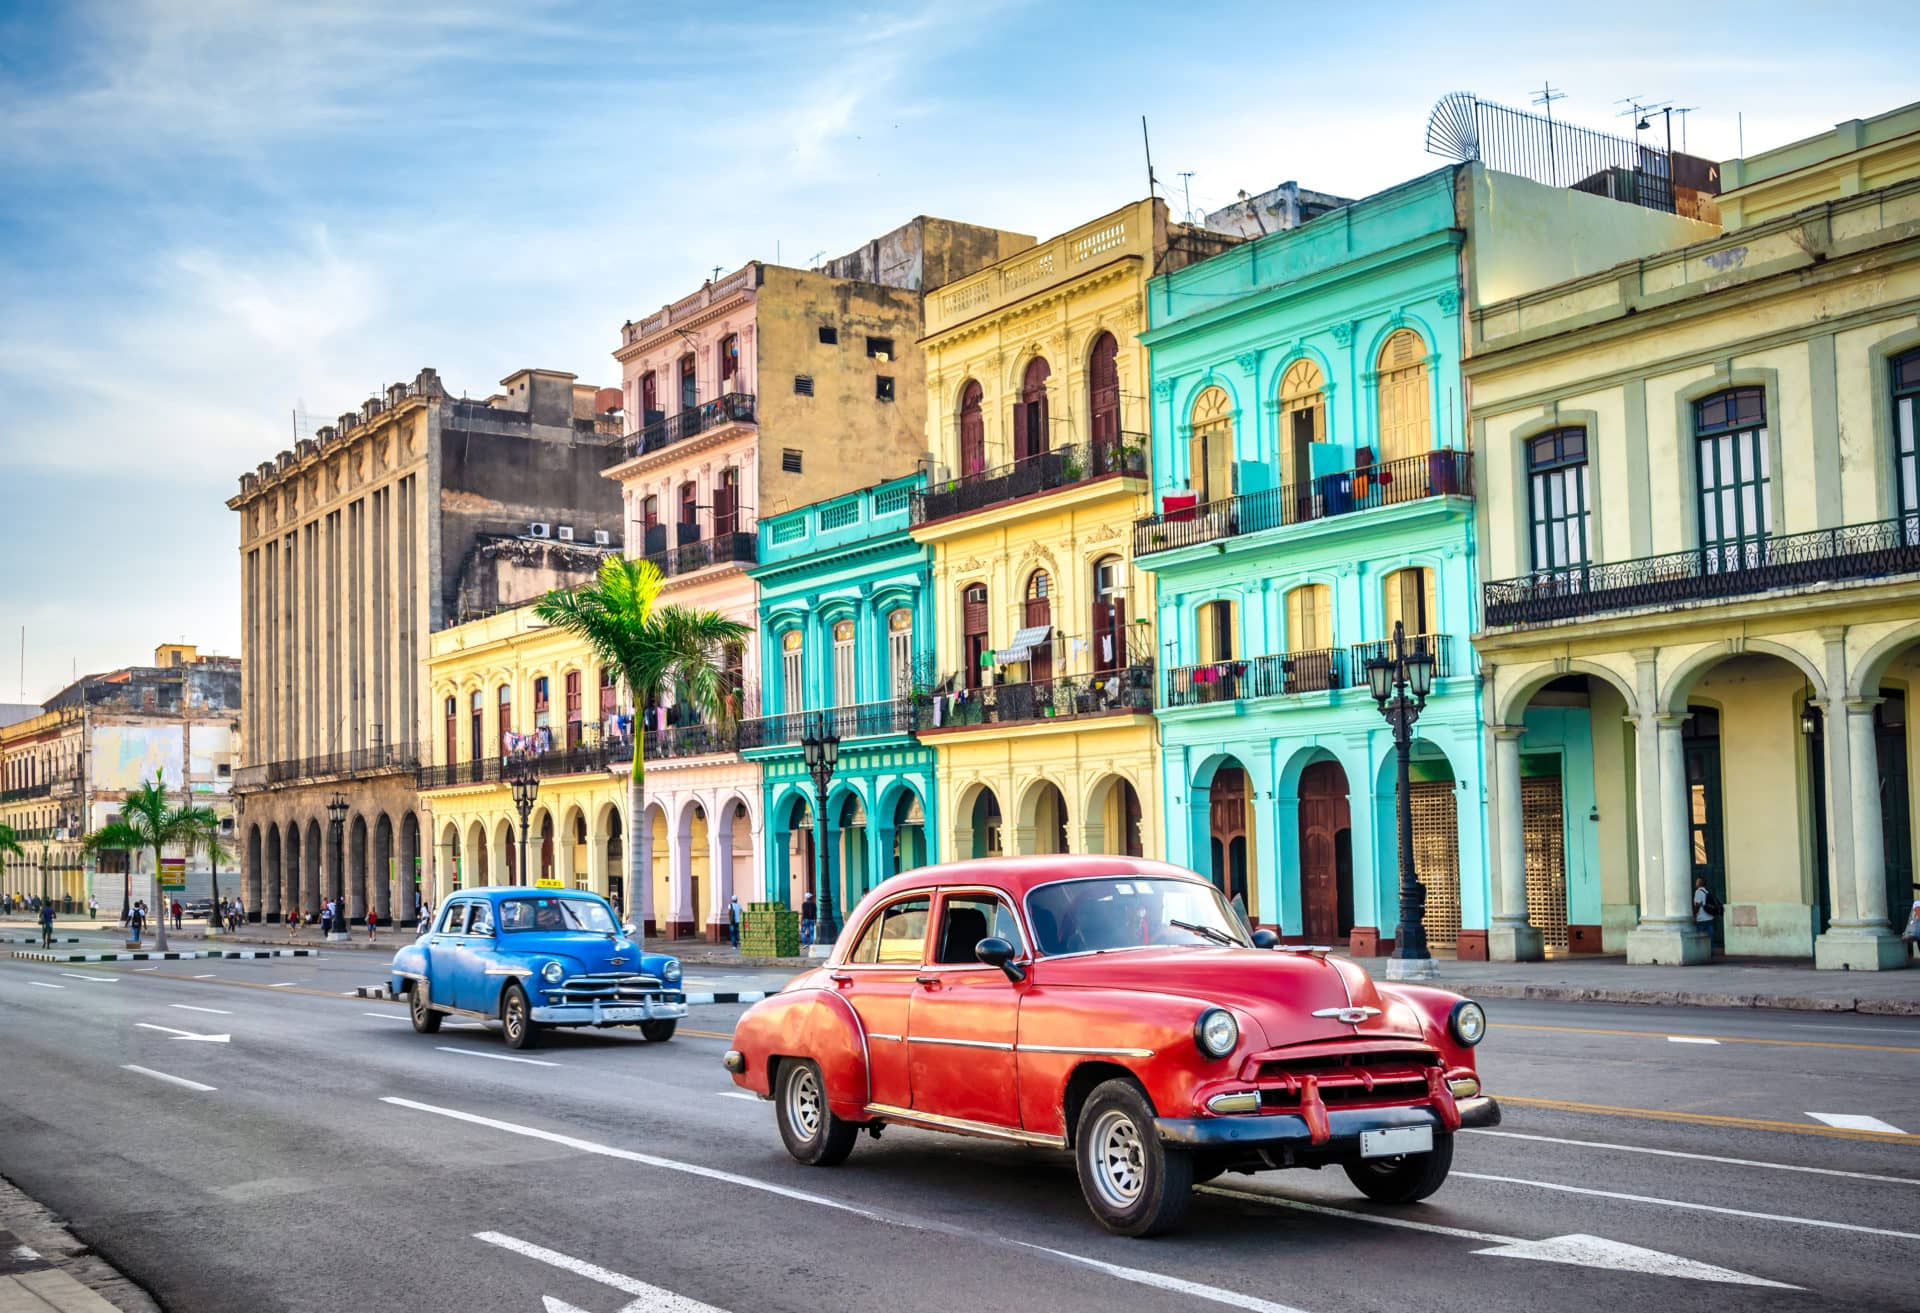 Exploring Old Havana (Habana Vieja)